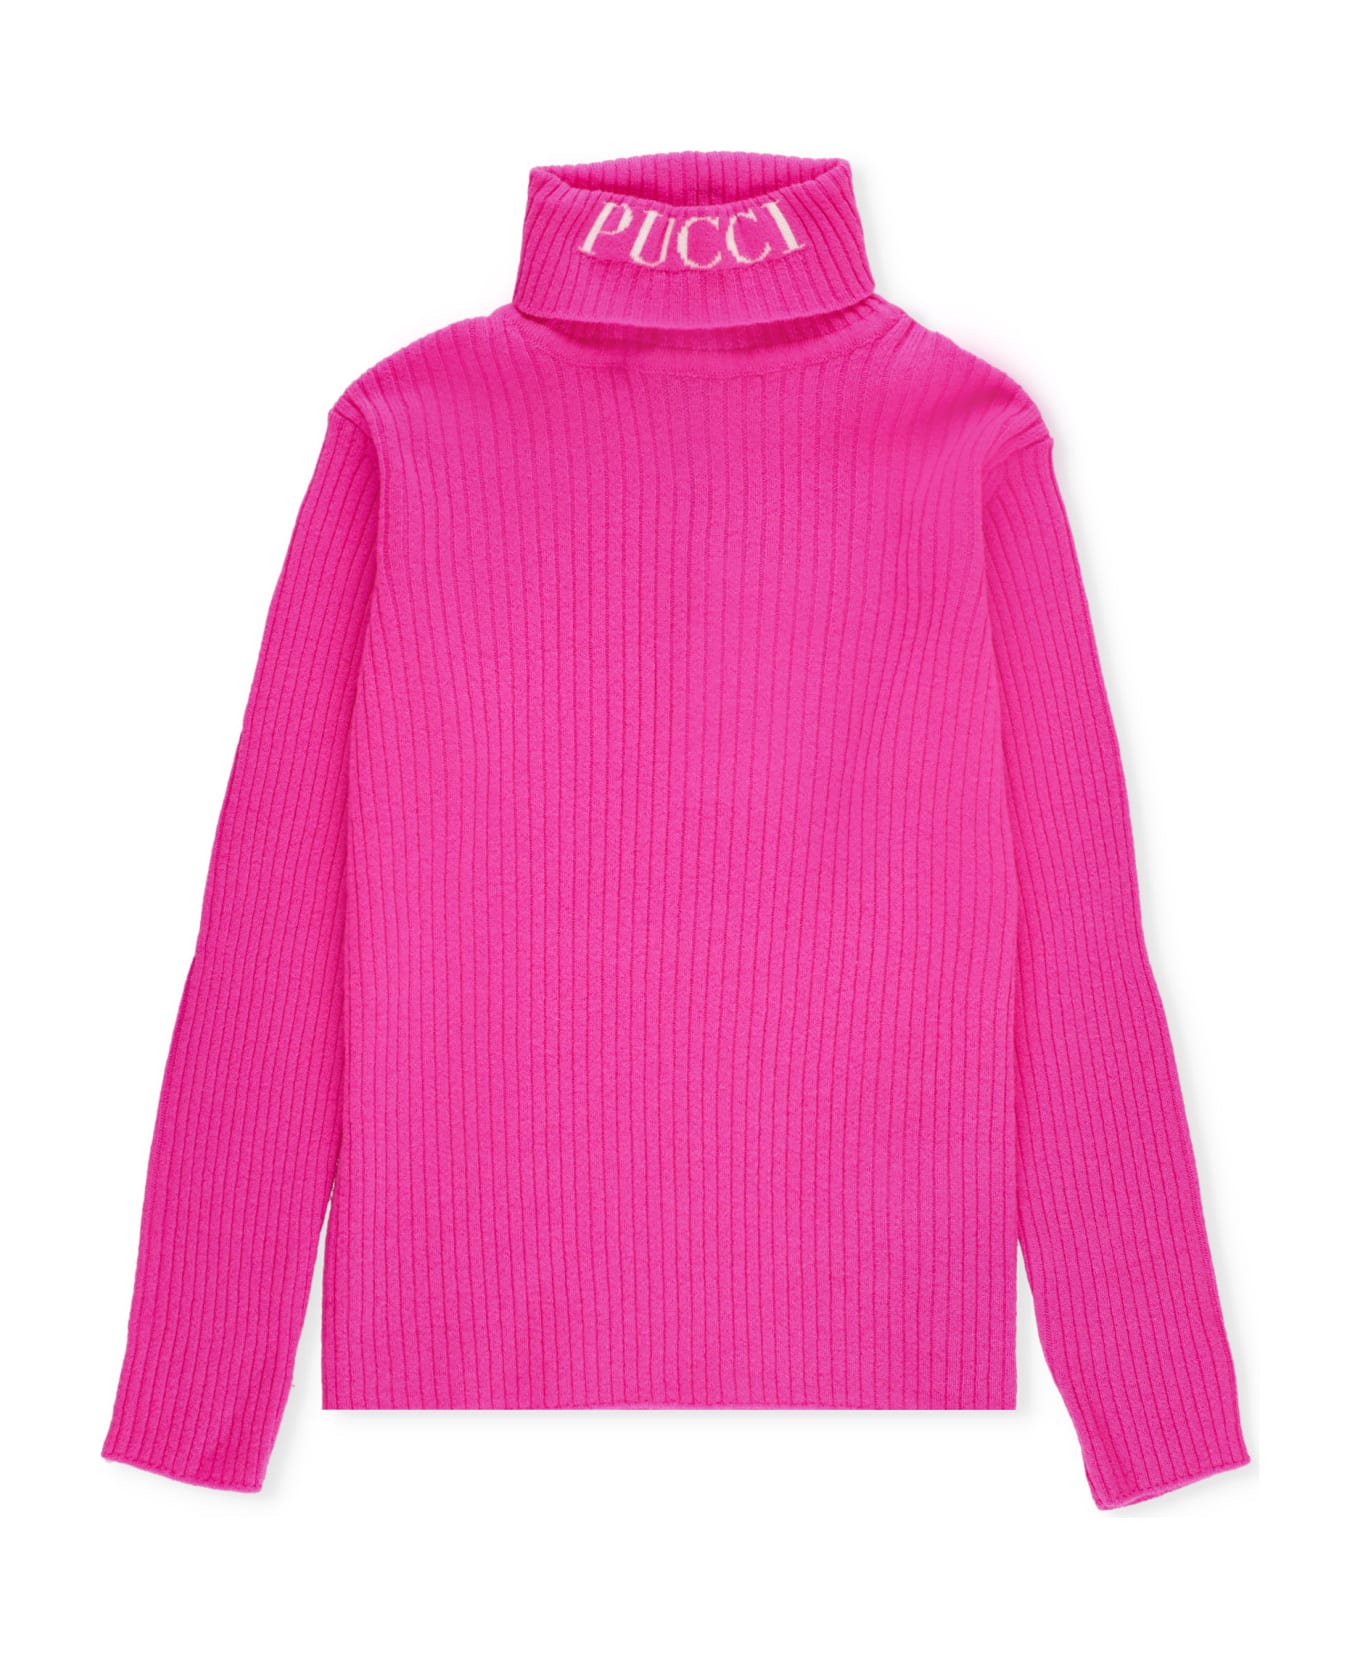 Pucci Wool Sweater - Fuchsia